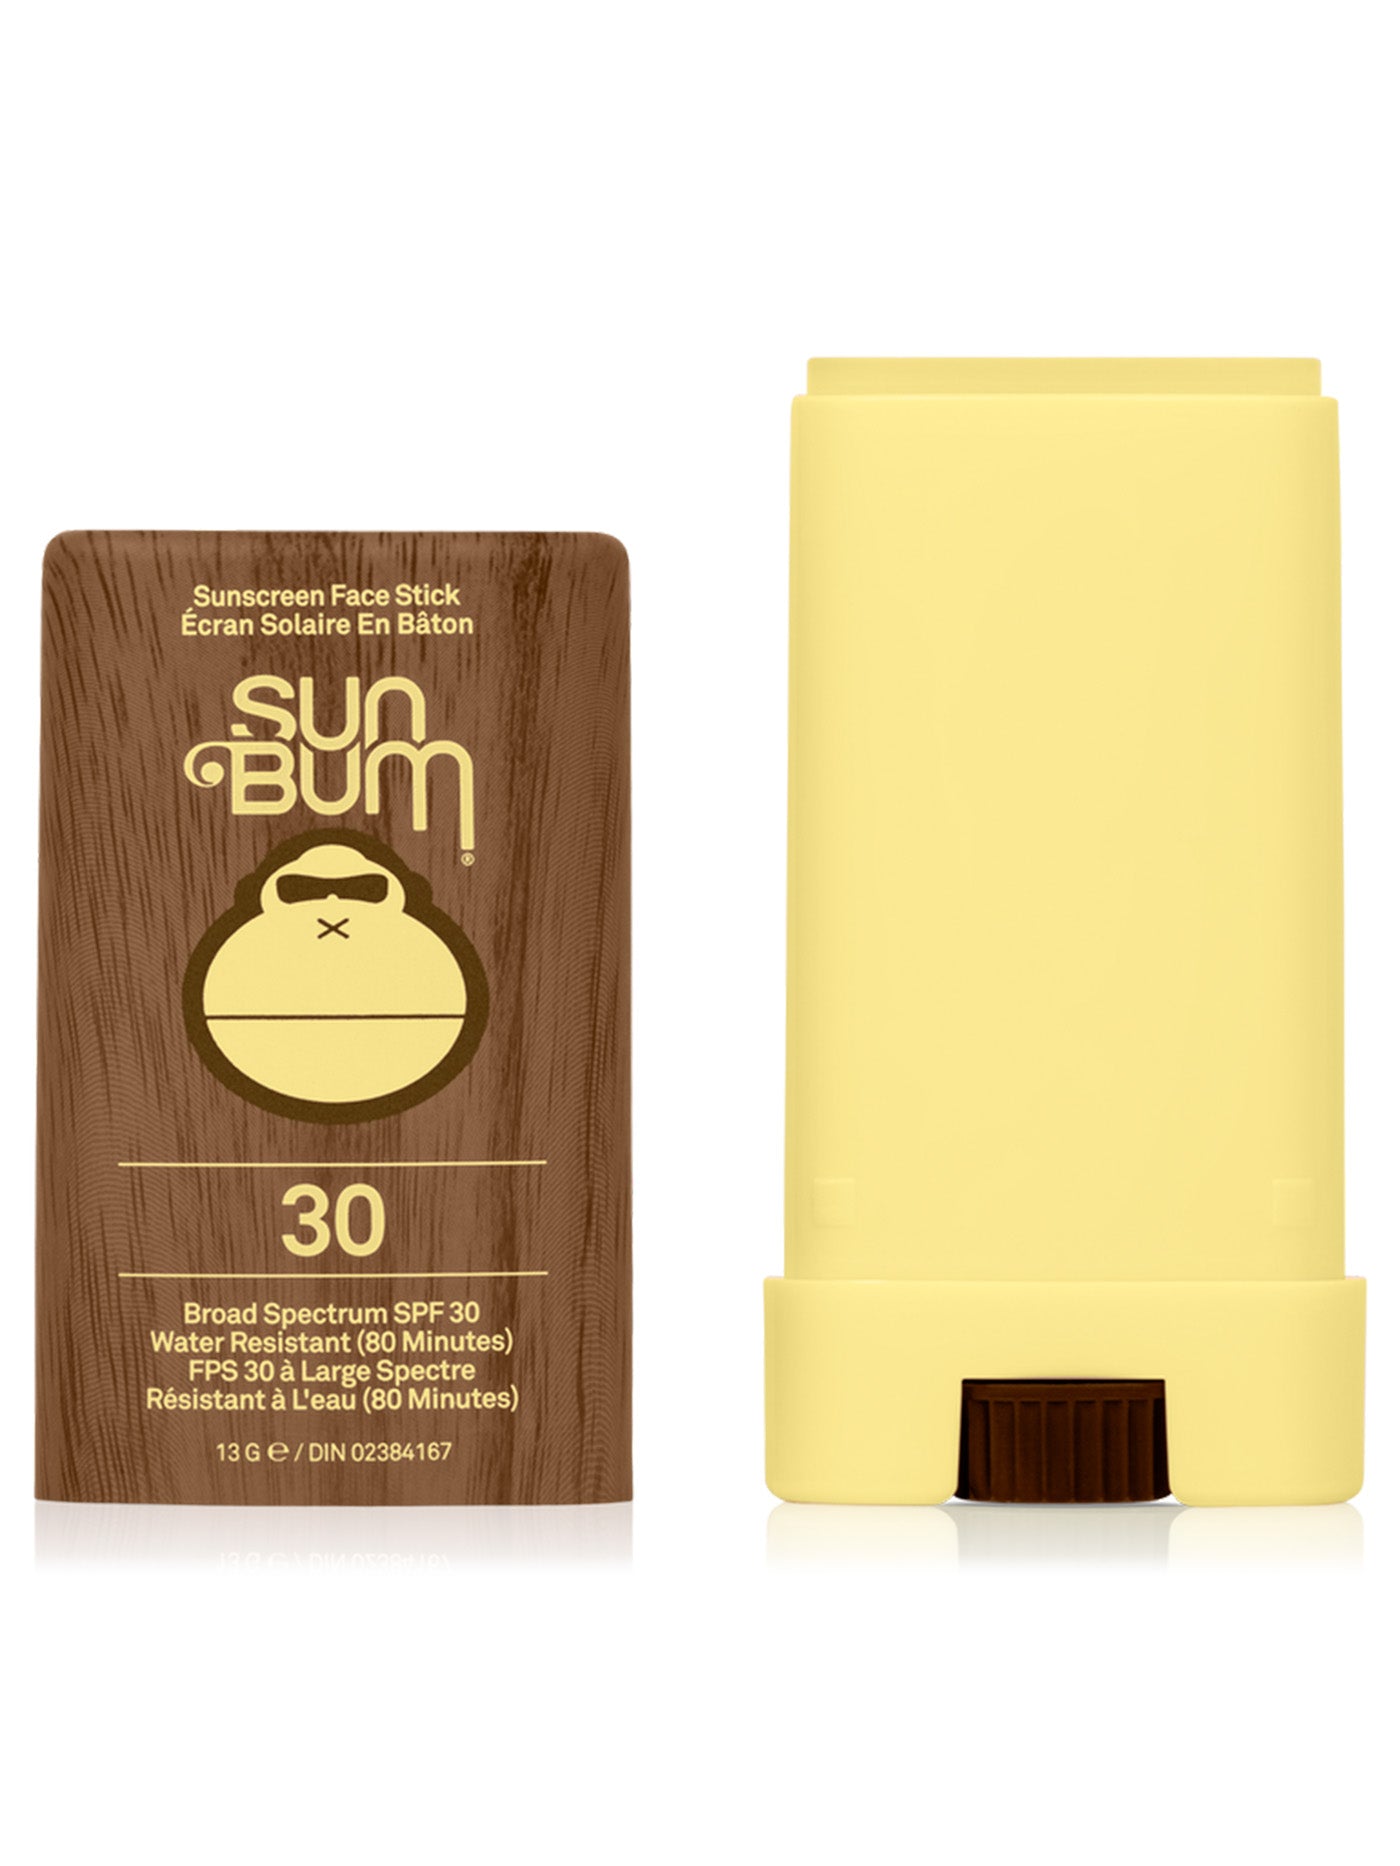 Sun Bum Original Face Stick 30 SPF Sunscreen Face Stick